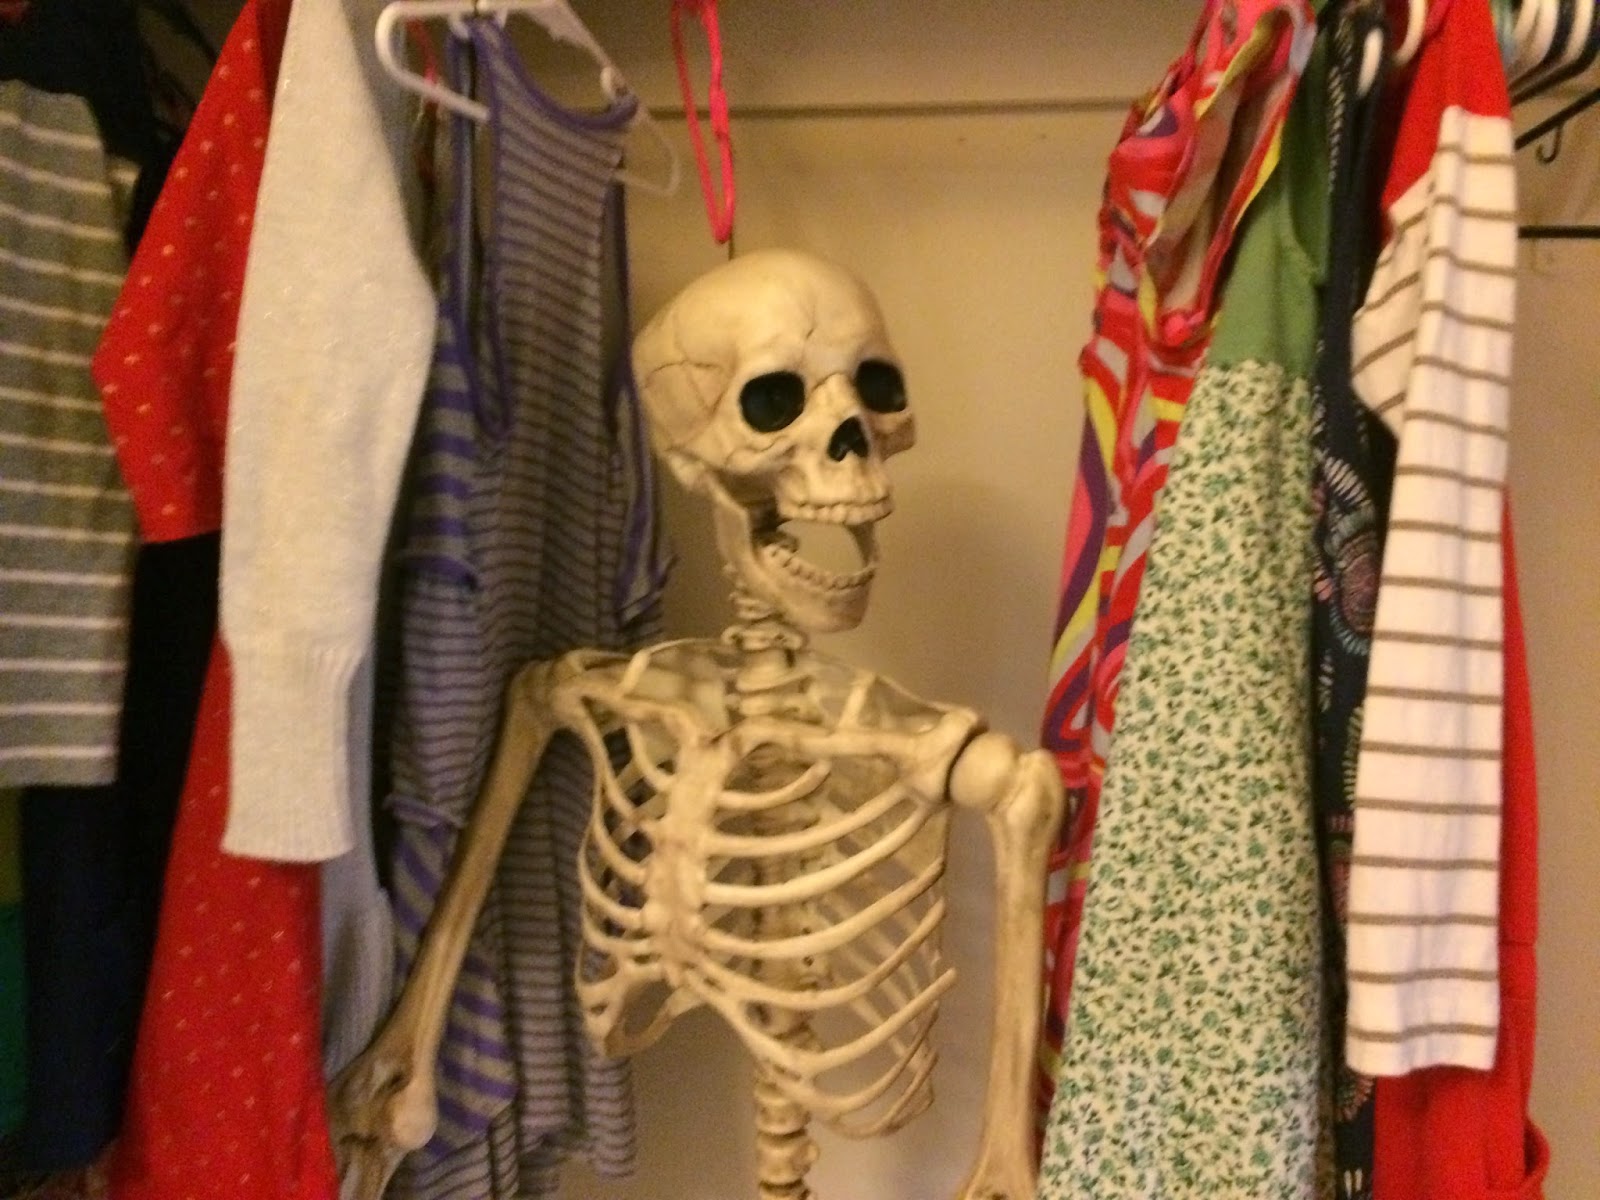 х ф скелет в шкафу